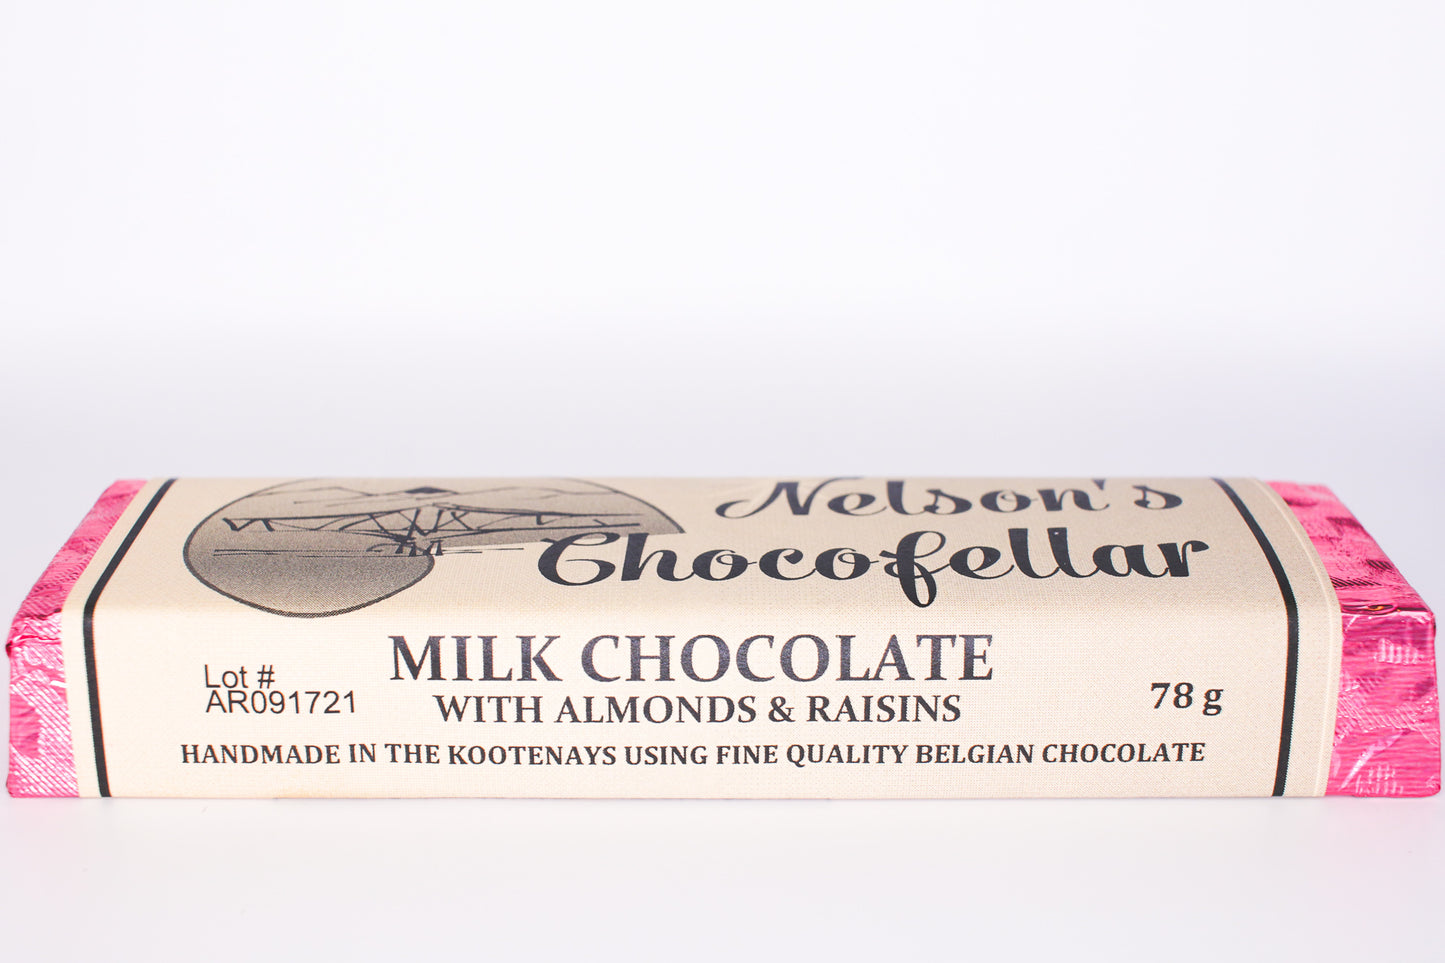 Milk chocolate Bar with Almond and Raisins handmade in the Kootenays